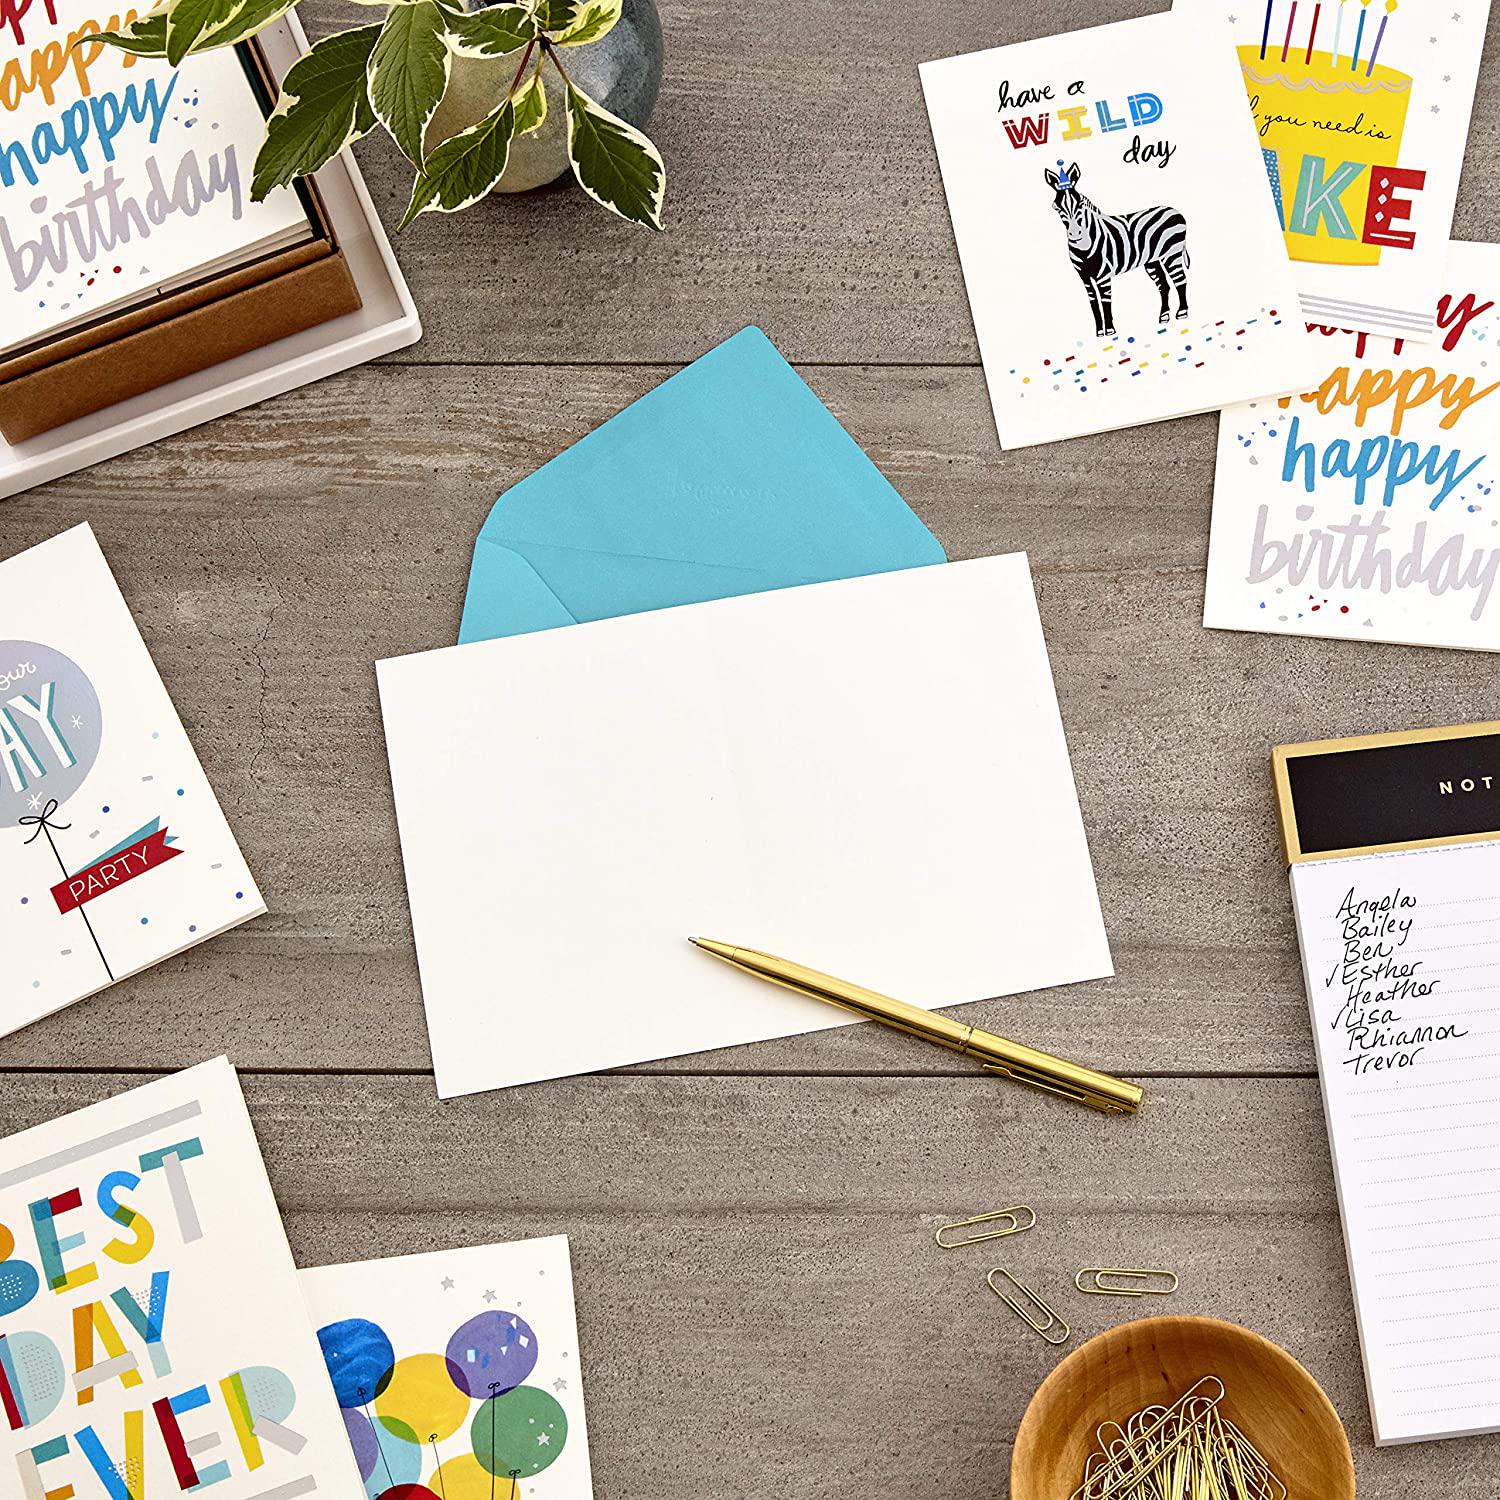 Hallmark, Hallmark Birthday Cards Assortment, 24 Cards with Envelopes (Rainbow Lettering, Best Day Ever)